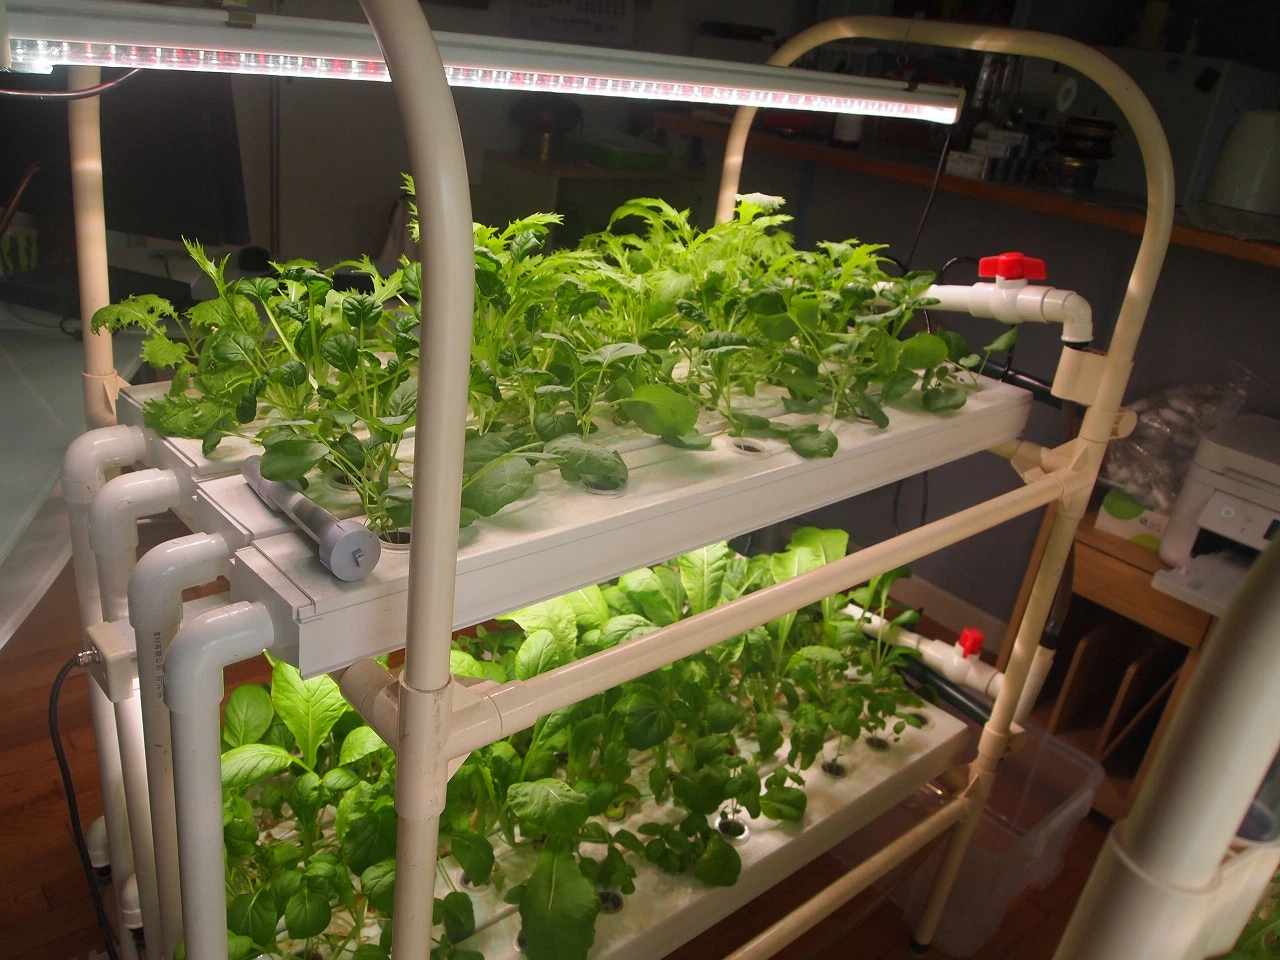 Nft Channel Hydroponics System for Vegetable Indoor Growing Vertical System